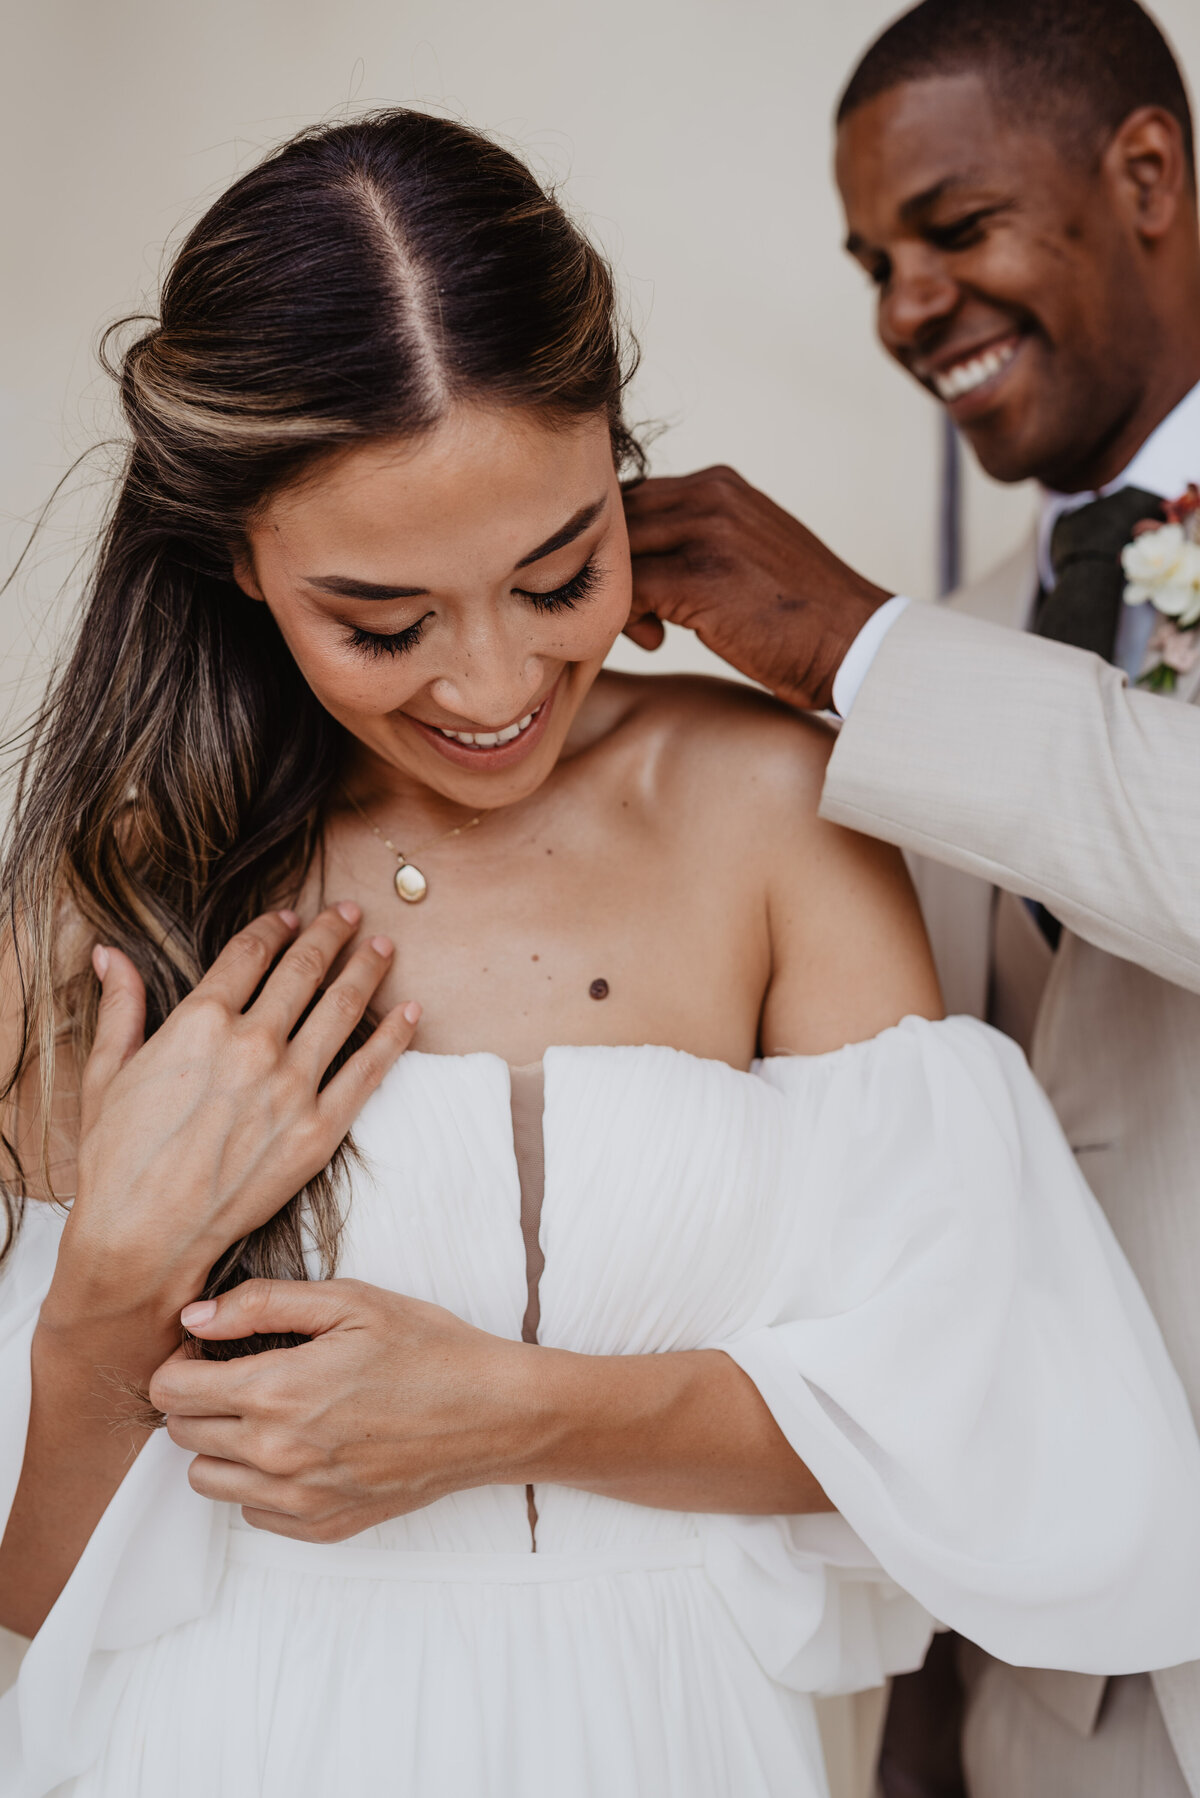 Utah Elopement Photographer captures groom putting necklace on bride